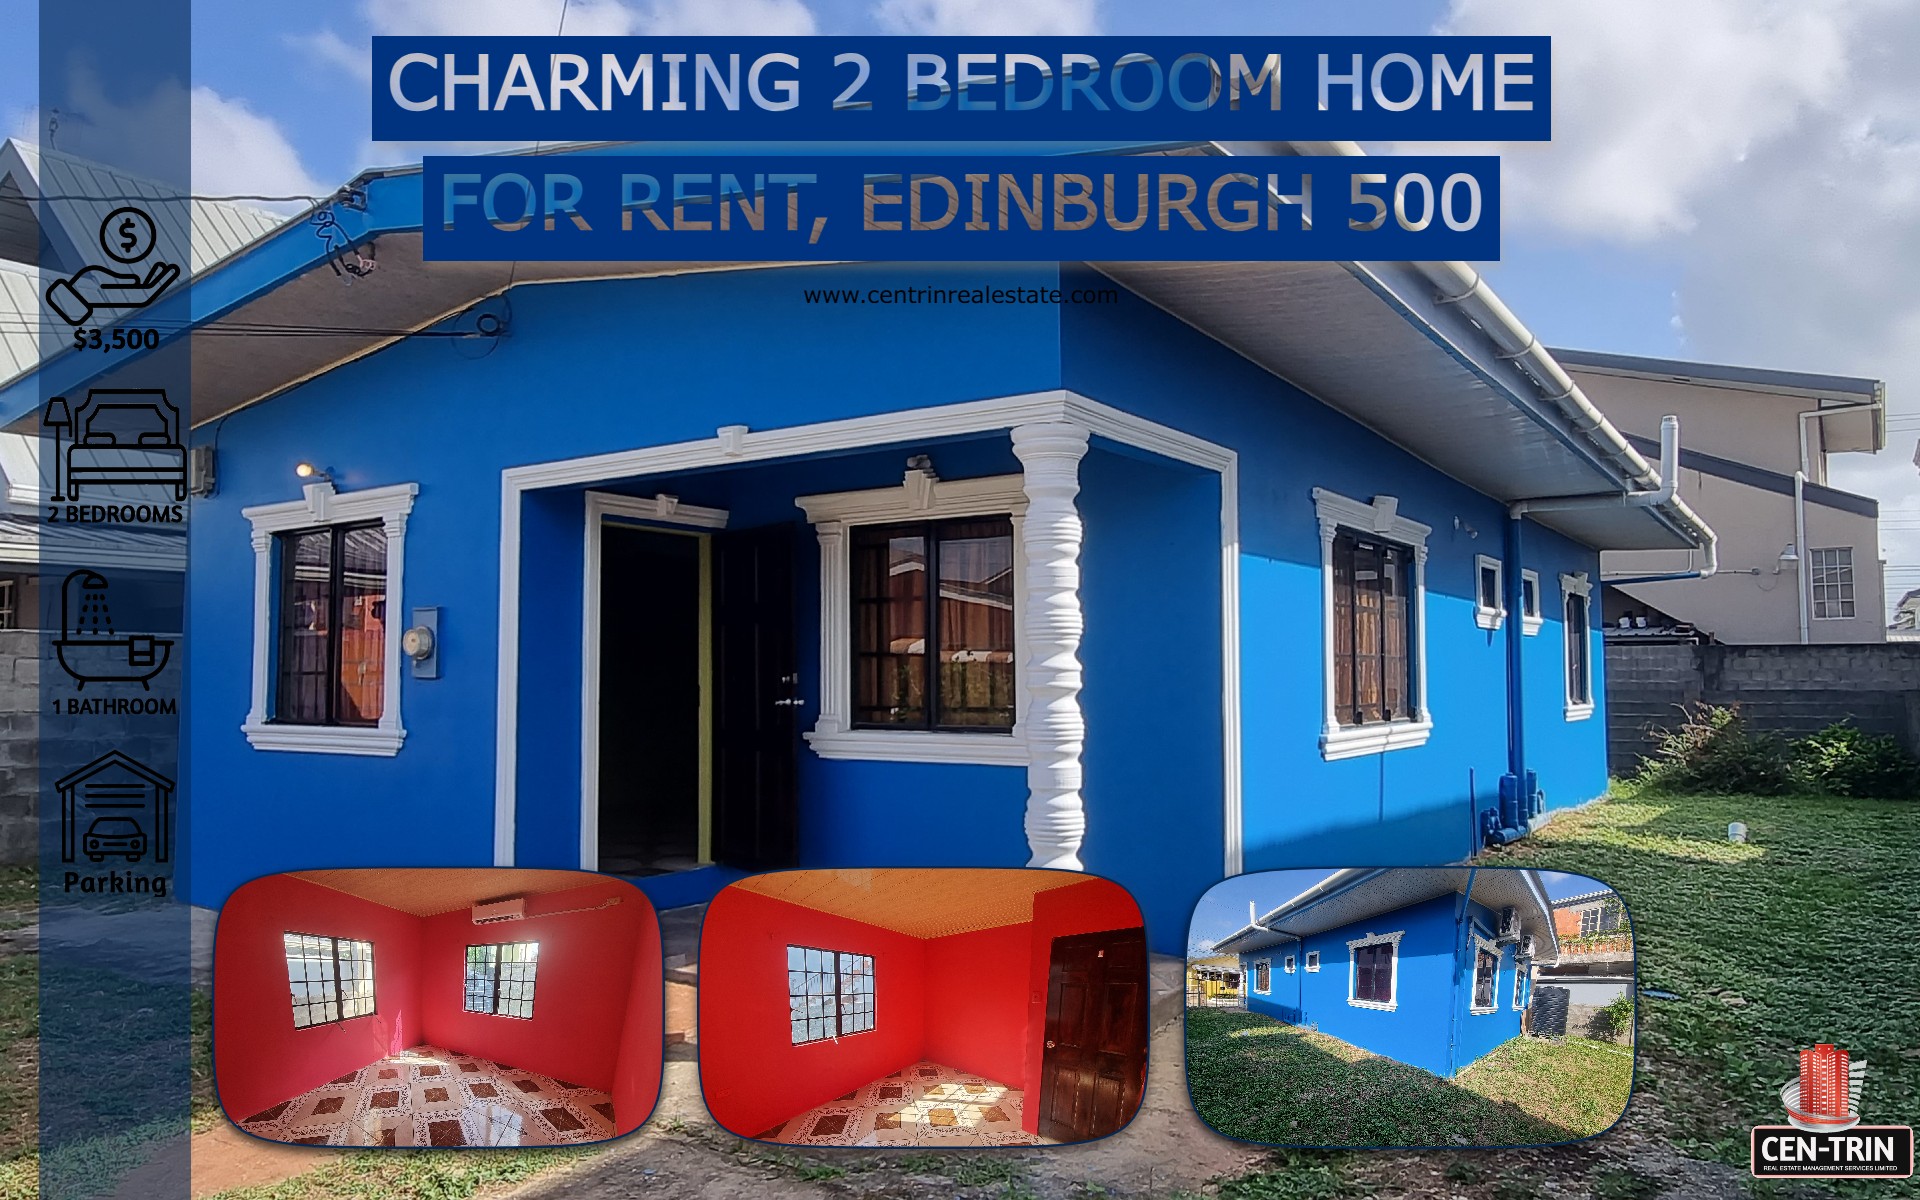 Cen-Trin Real Estate Management Services Limited - Edinburgh 500 Rental